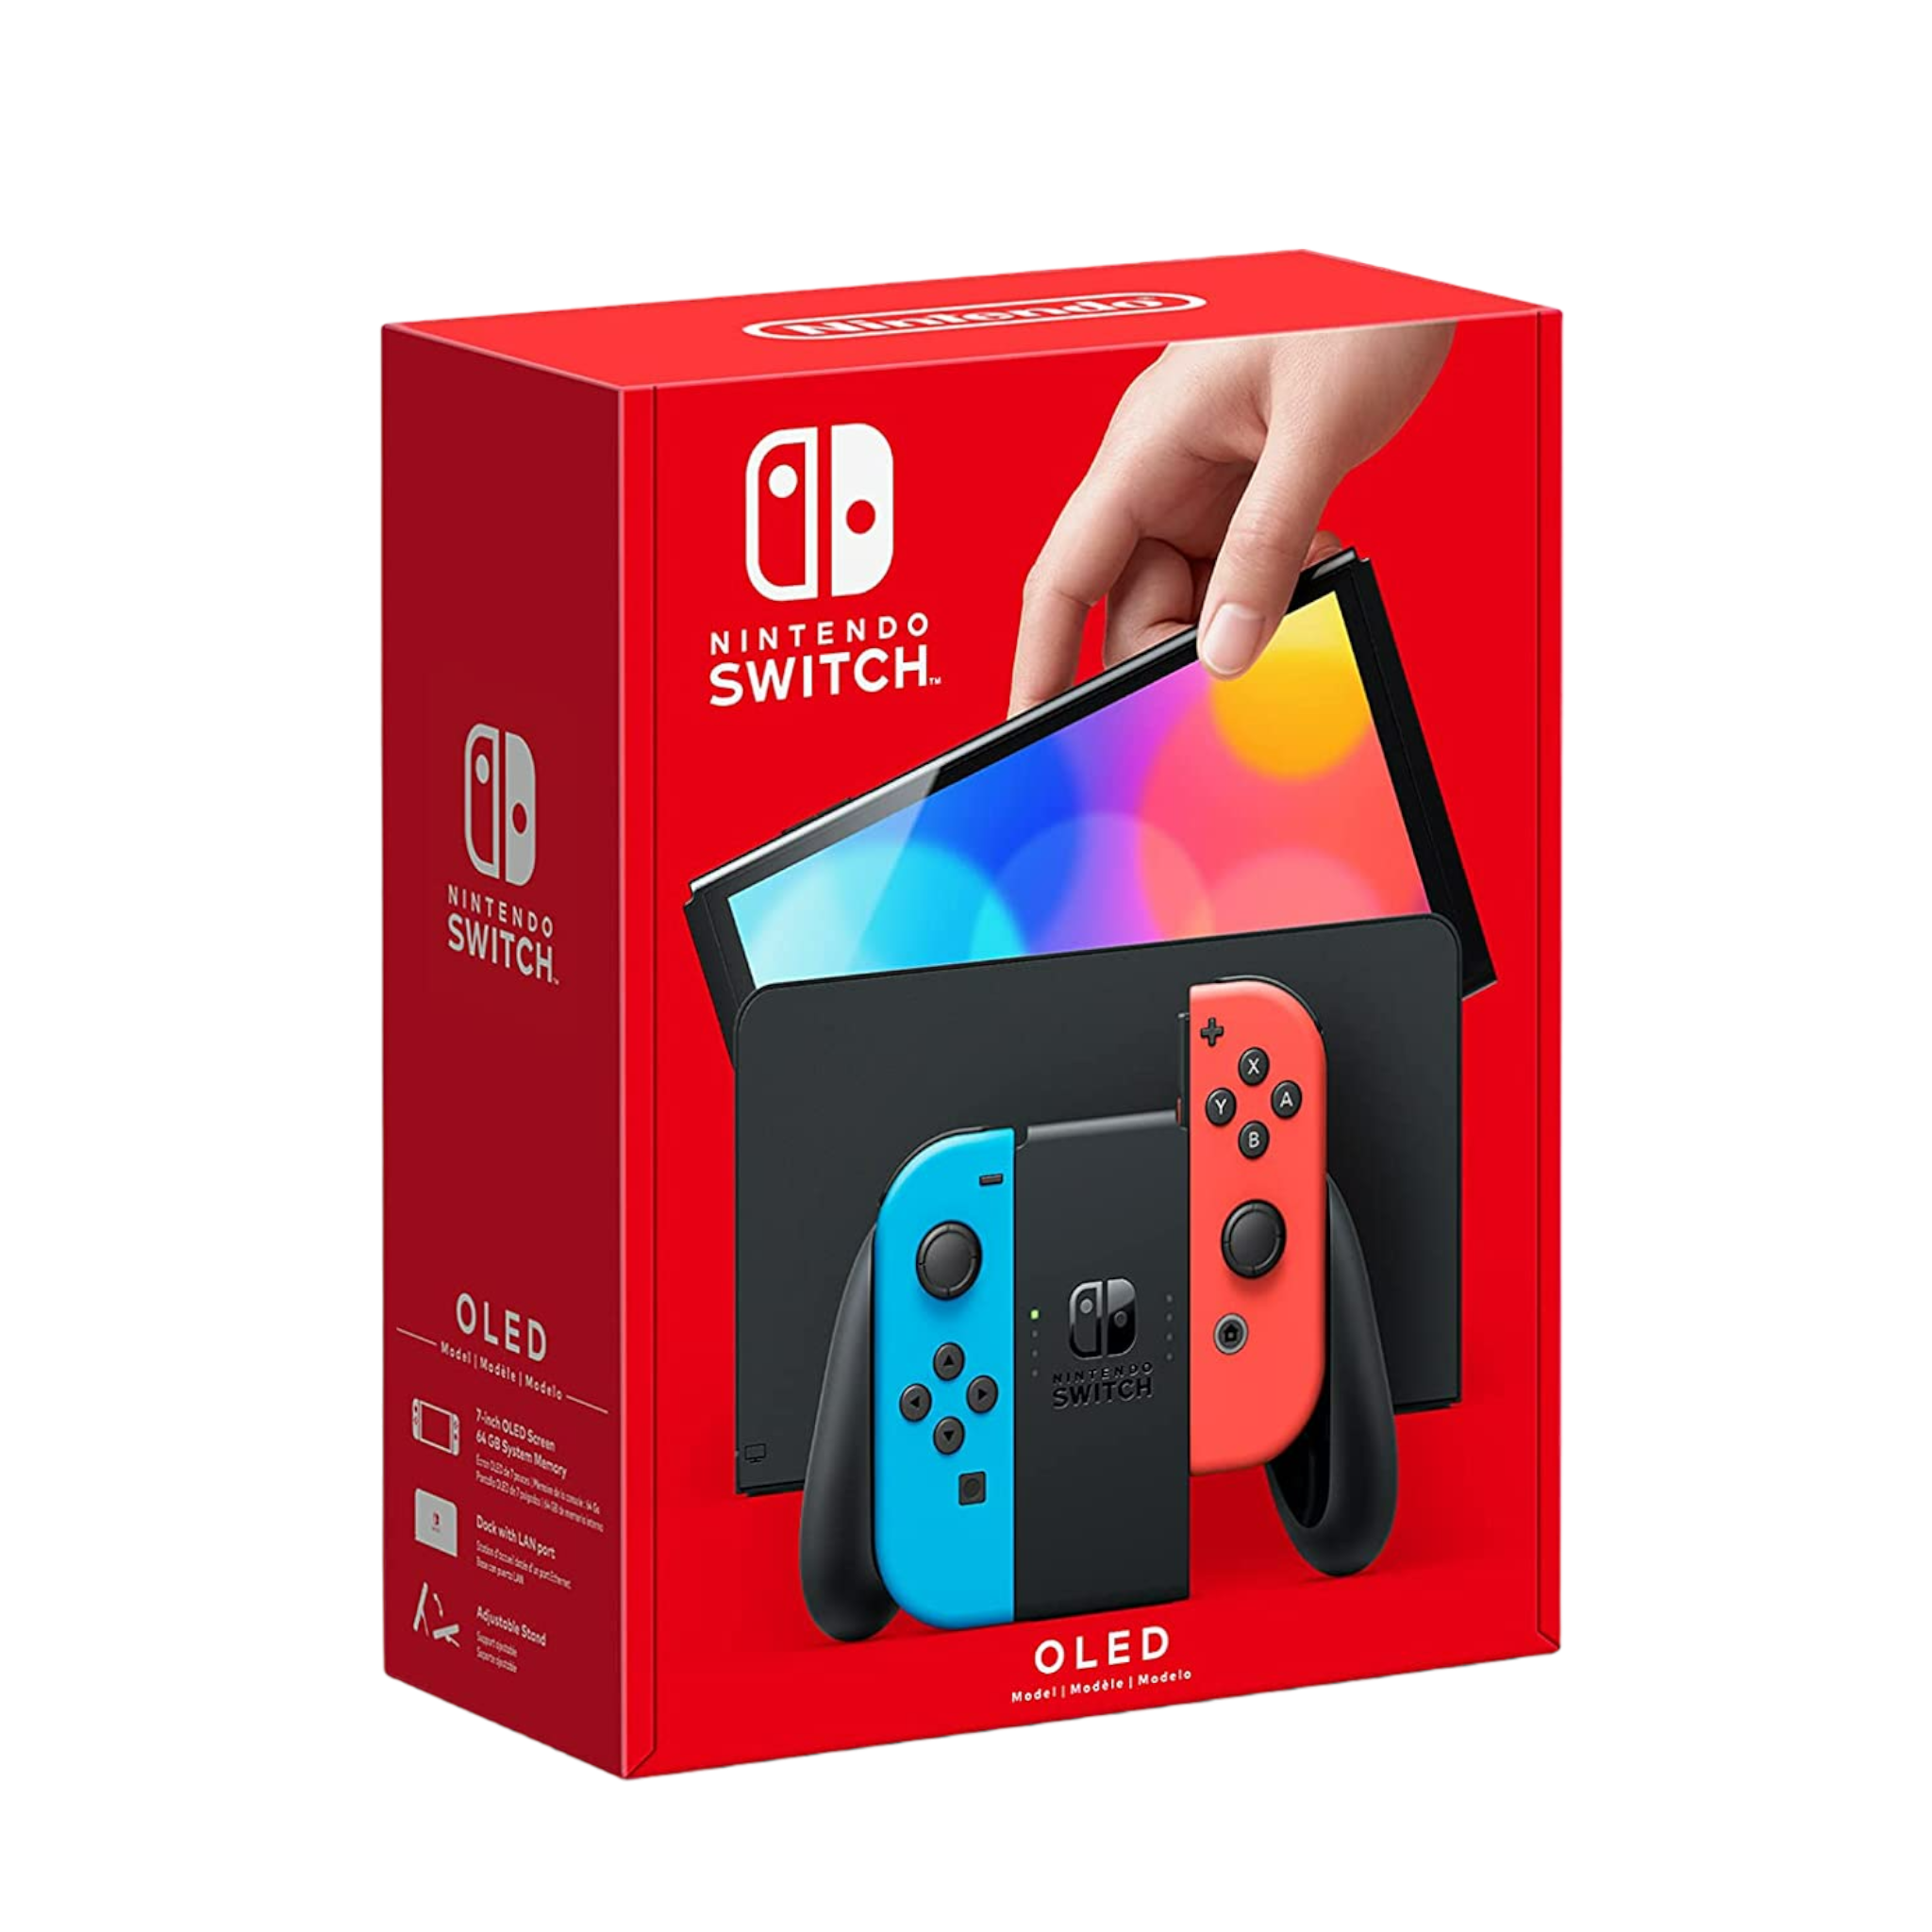 Nintendo Switch OLED Model (Neon Red & Neon Blue Joy-Con, Black Dock) - Pro-Distributing